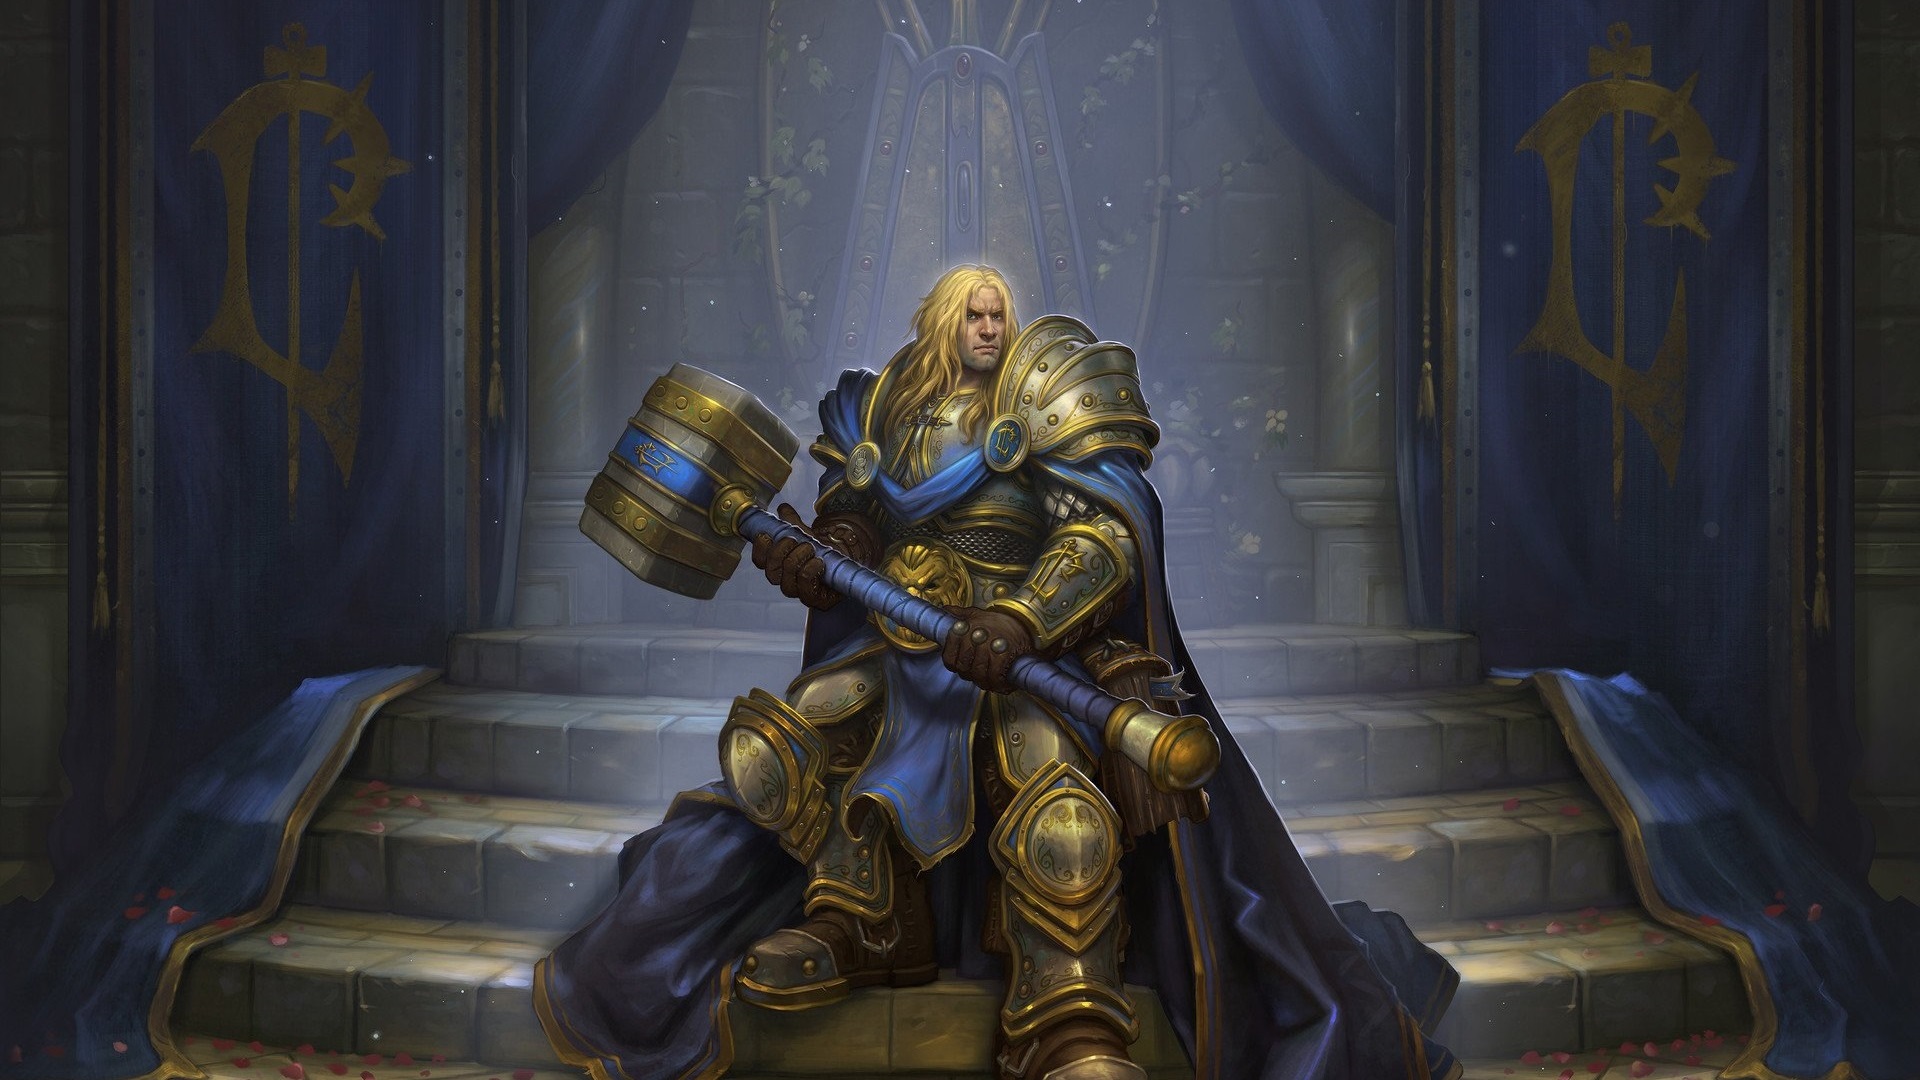 General 1920x1080 Hearthstone: Heroes of Warcraft Warcraft Warcraft III: Reign of Chaos Prince video games Arthas Menethil PC gaming hammer fantasy art fantasy men